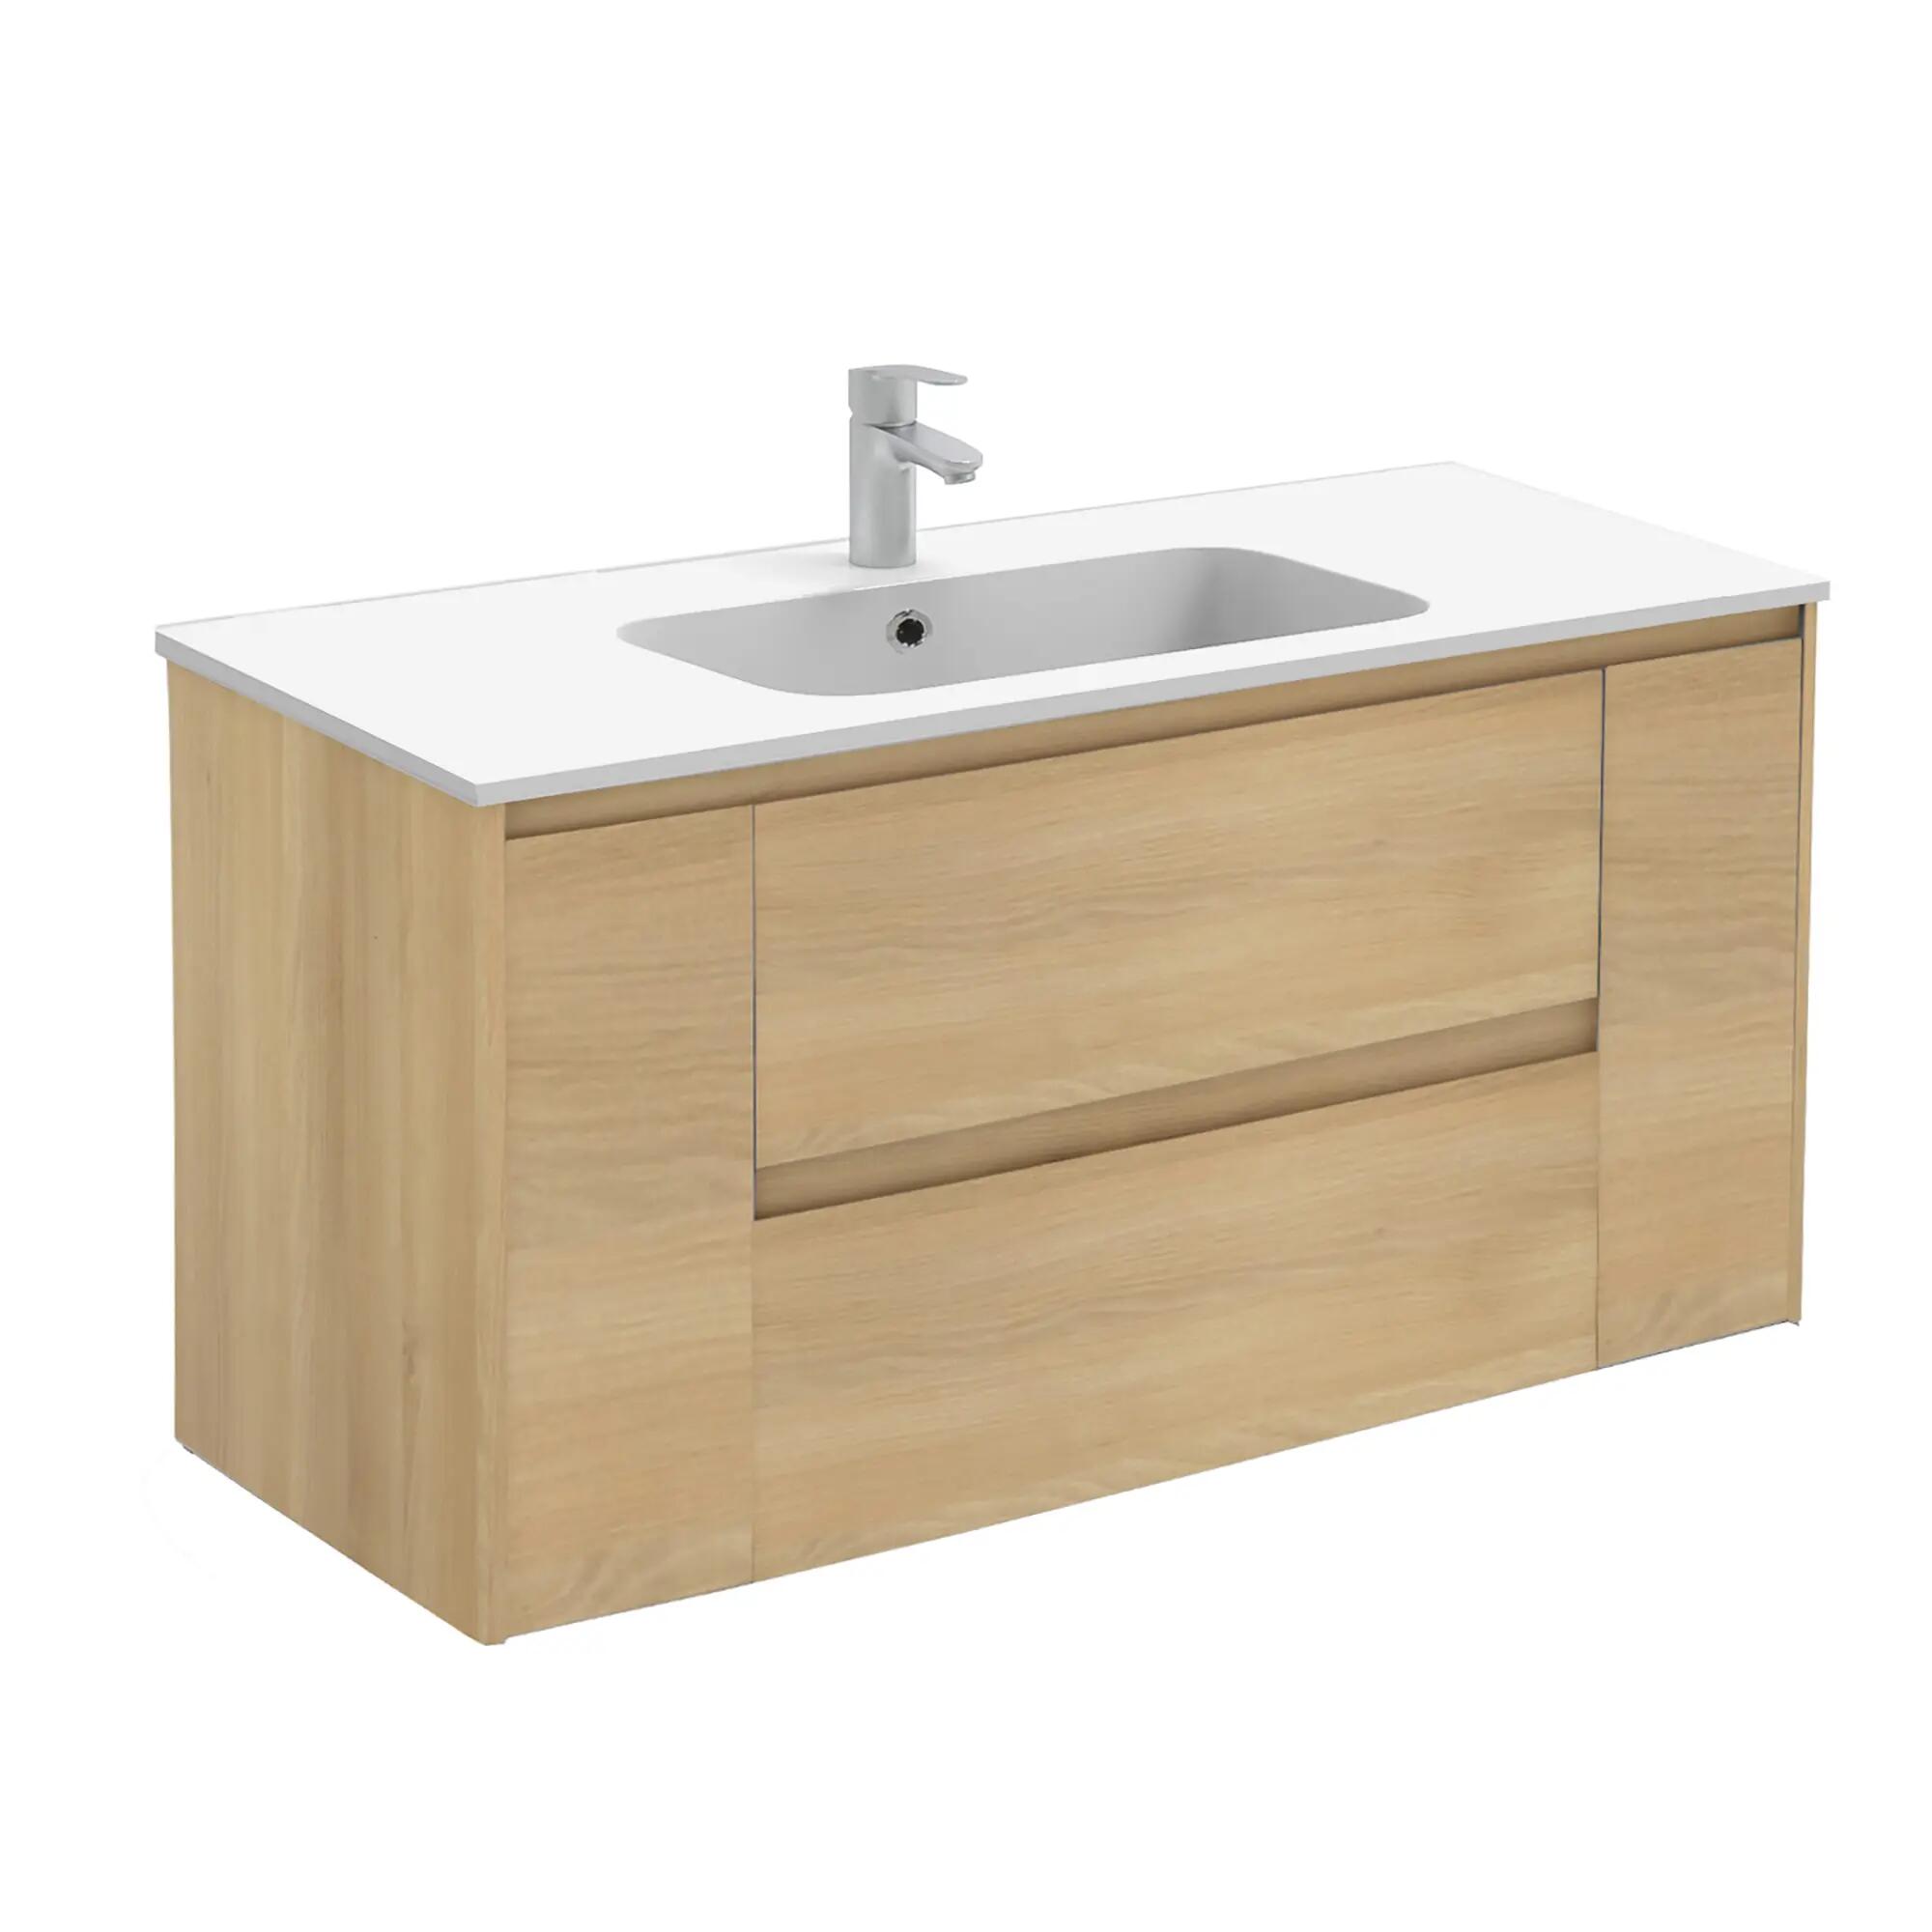 Pack de mueble de baño con lavabo alfa roble 120x45 cm